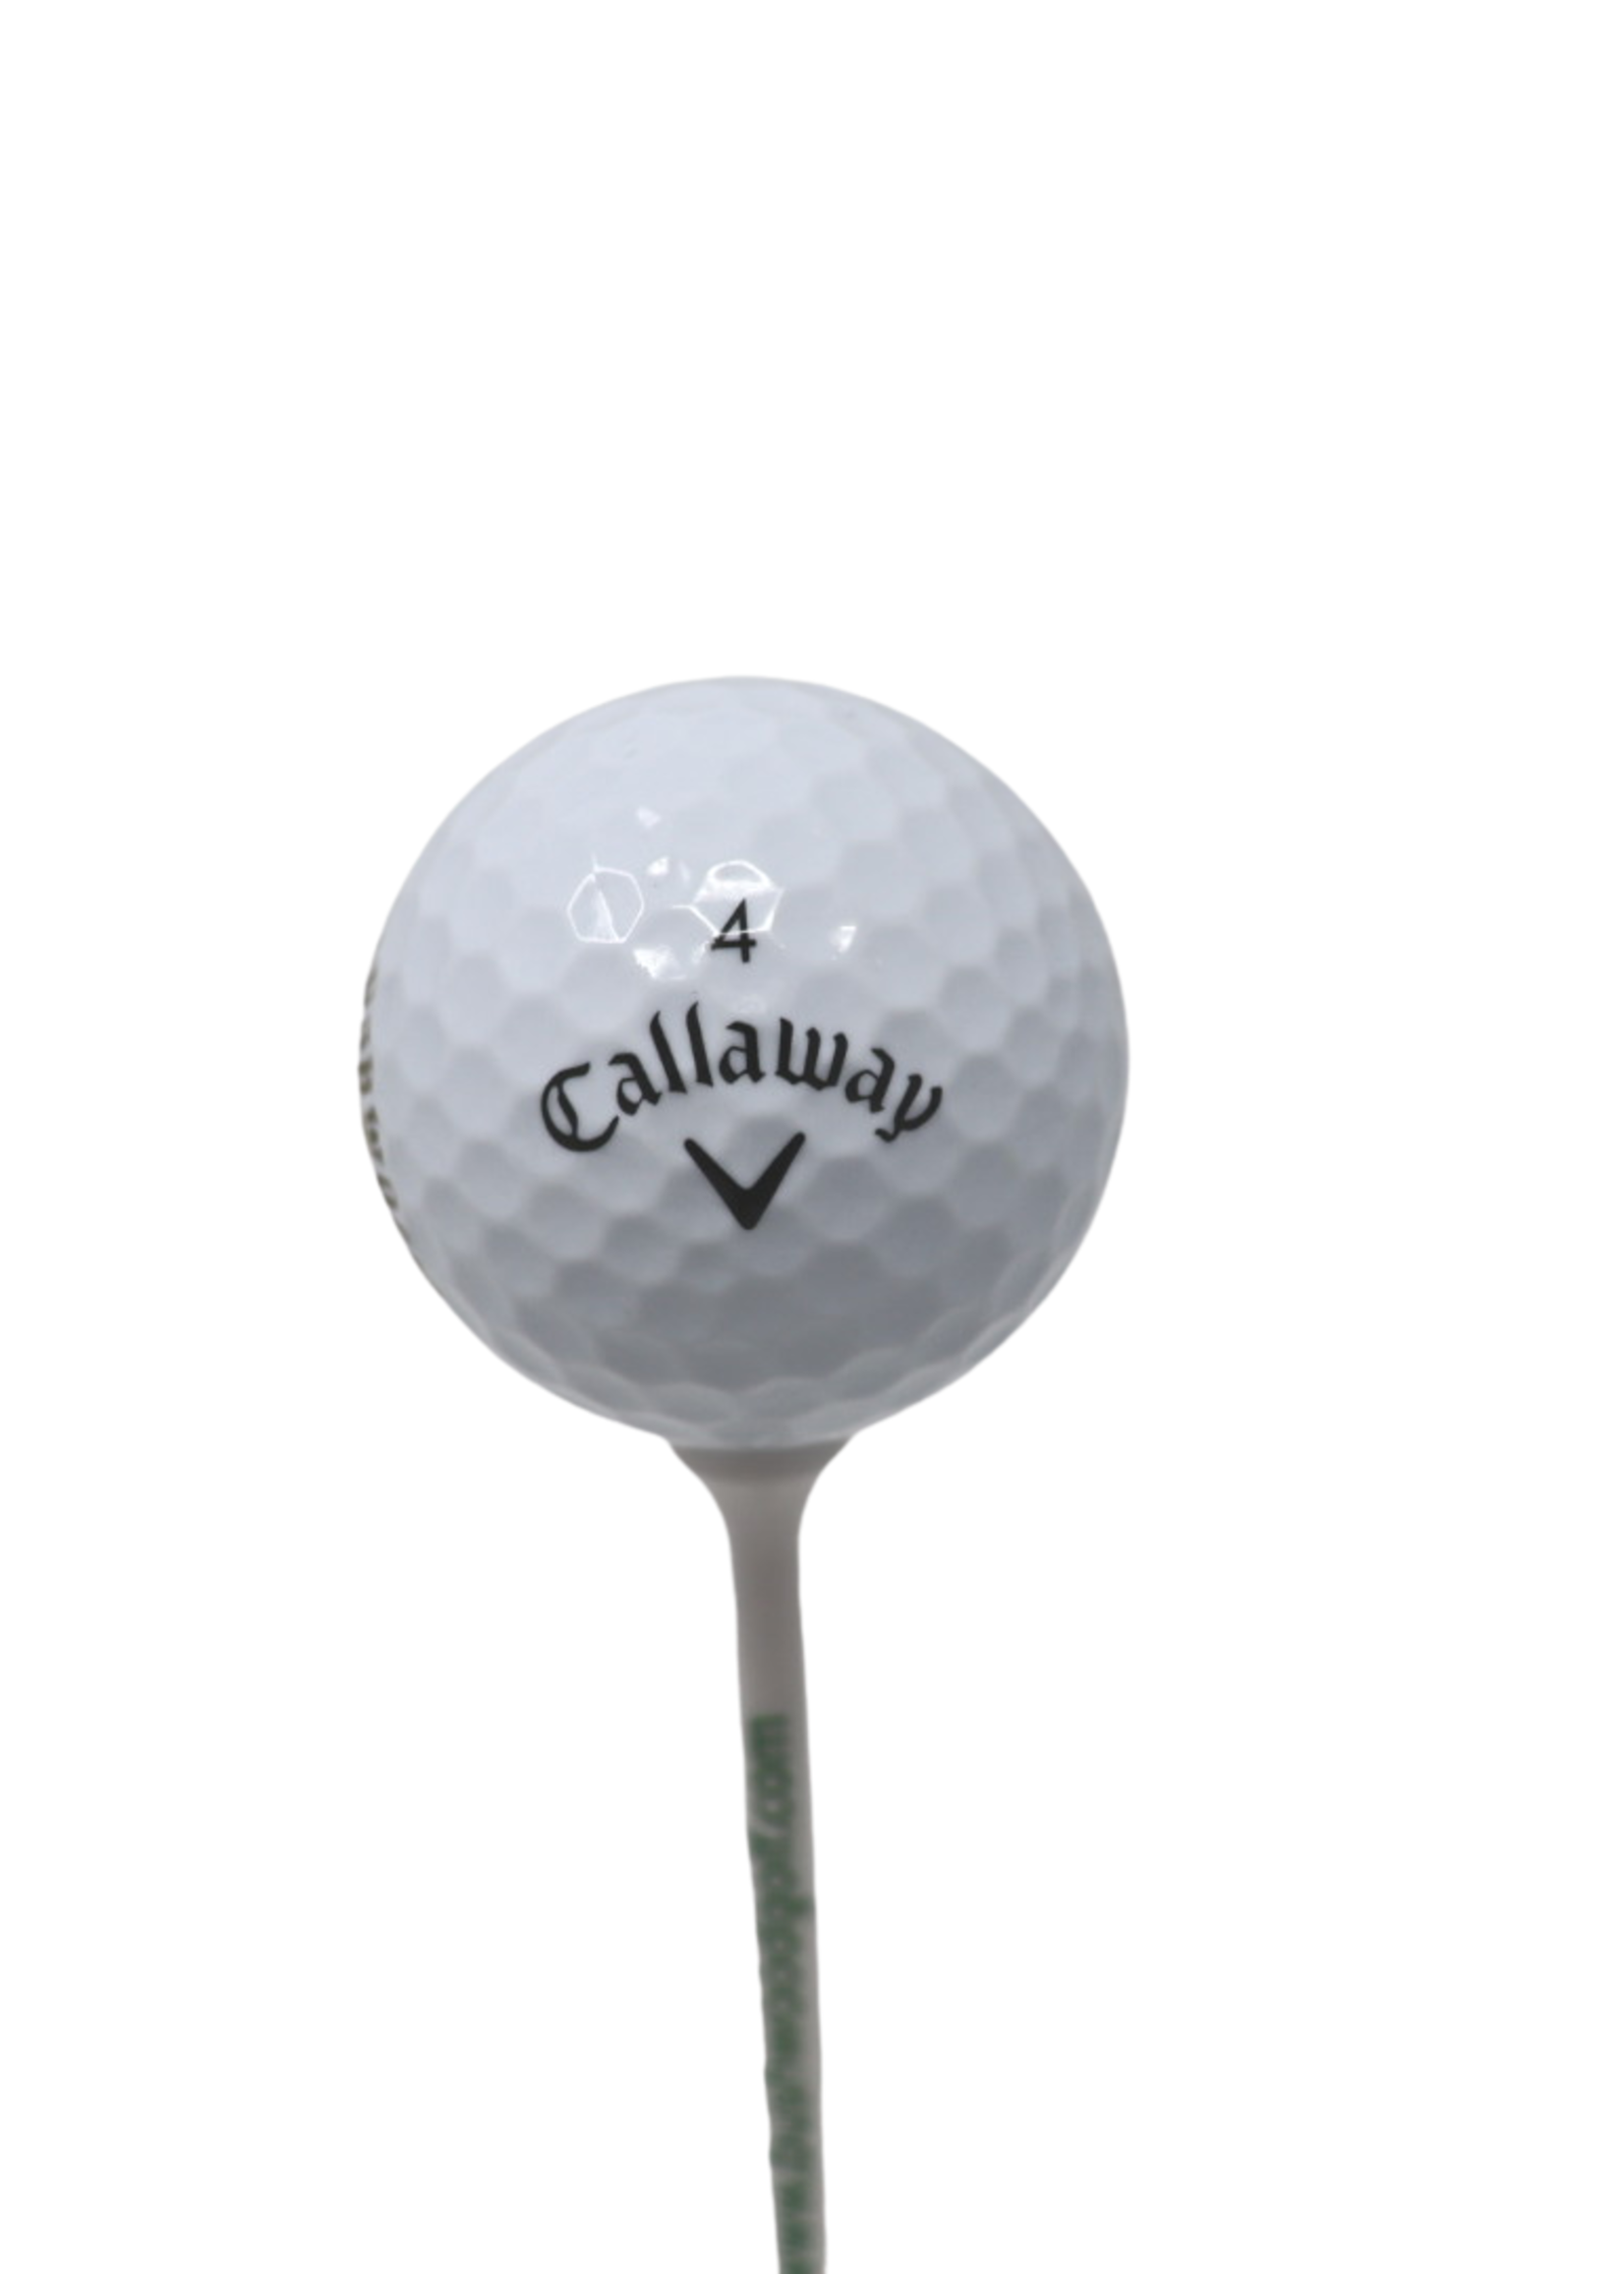 Callaway Callaway Logo Jar Balls